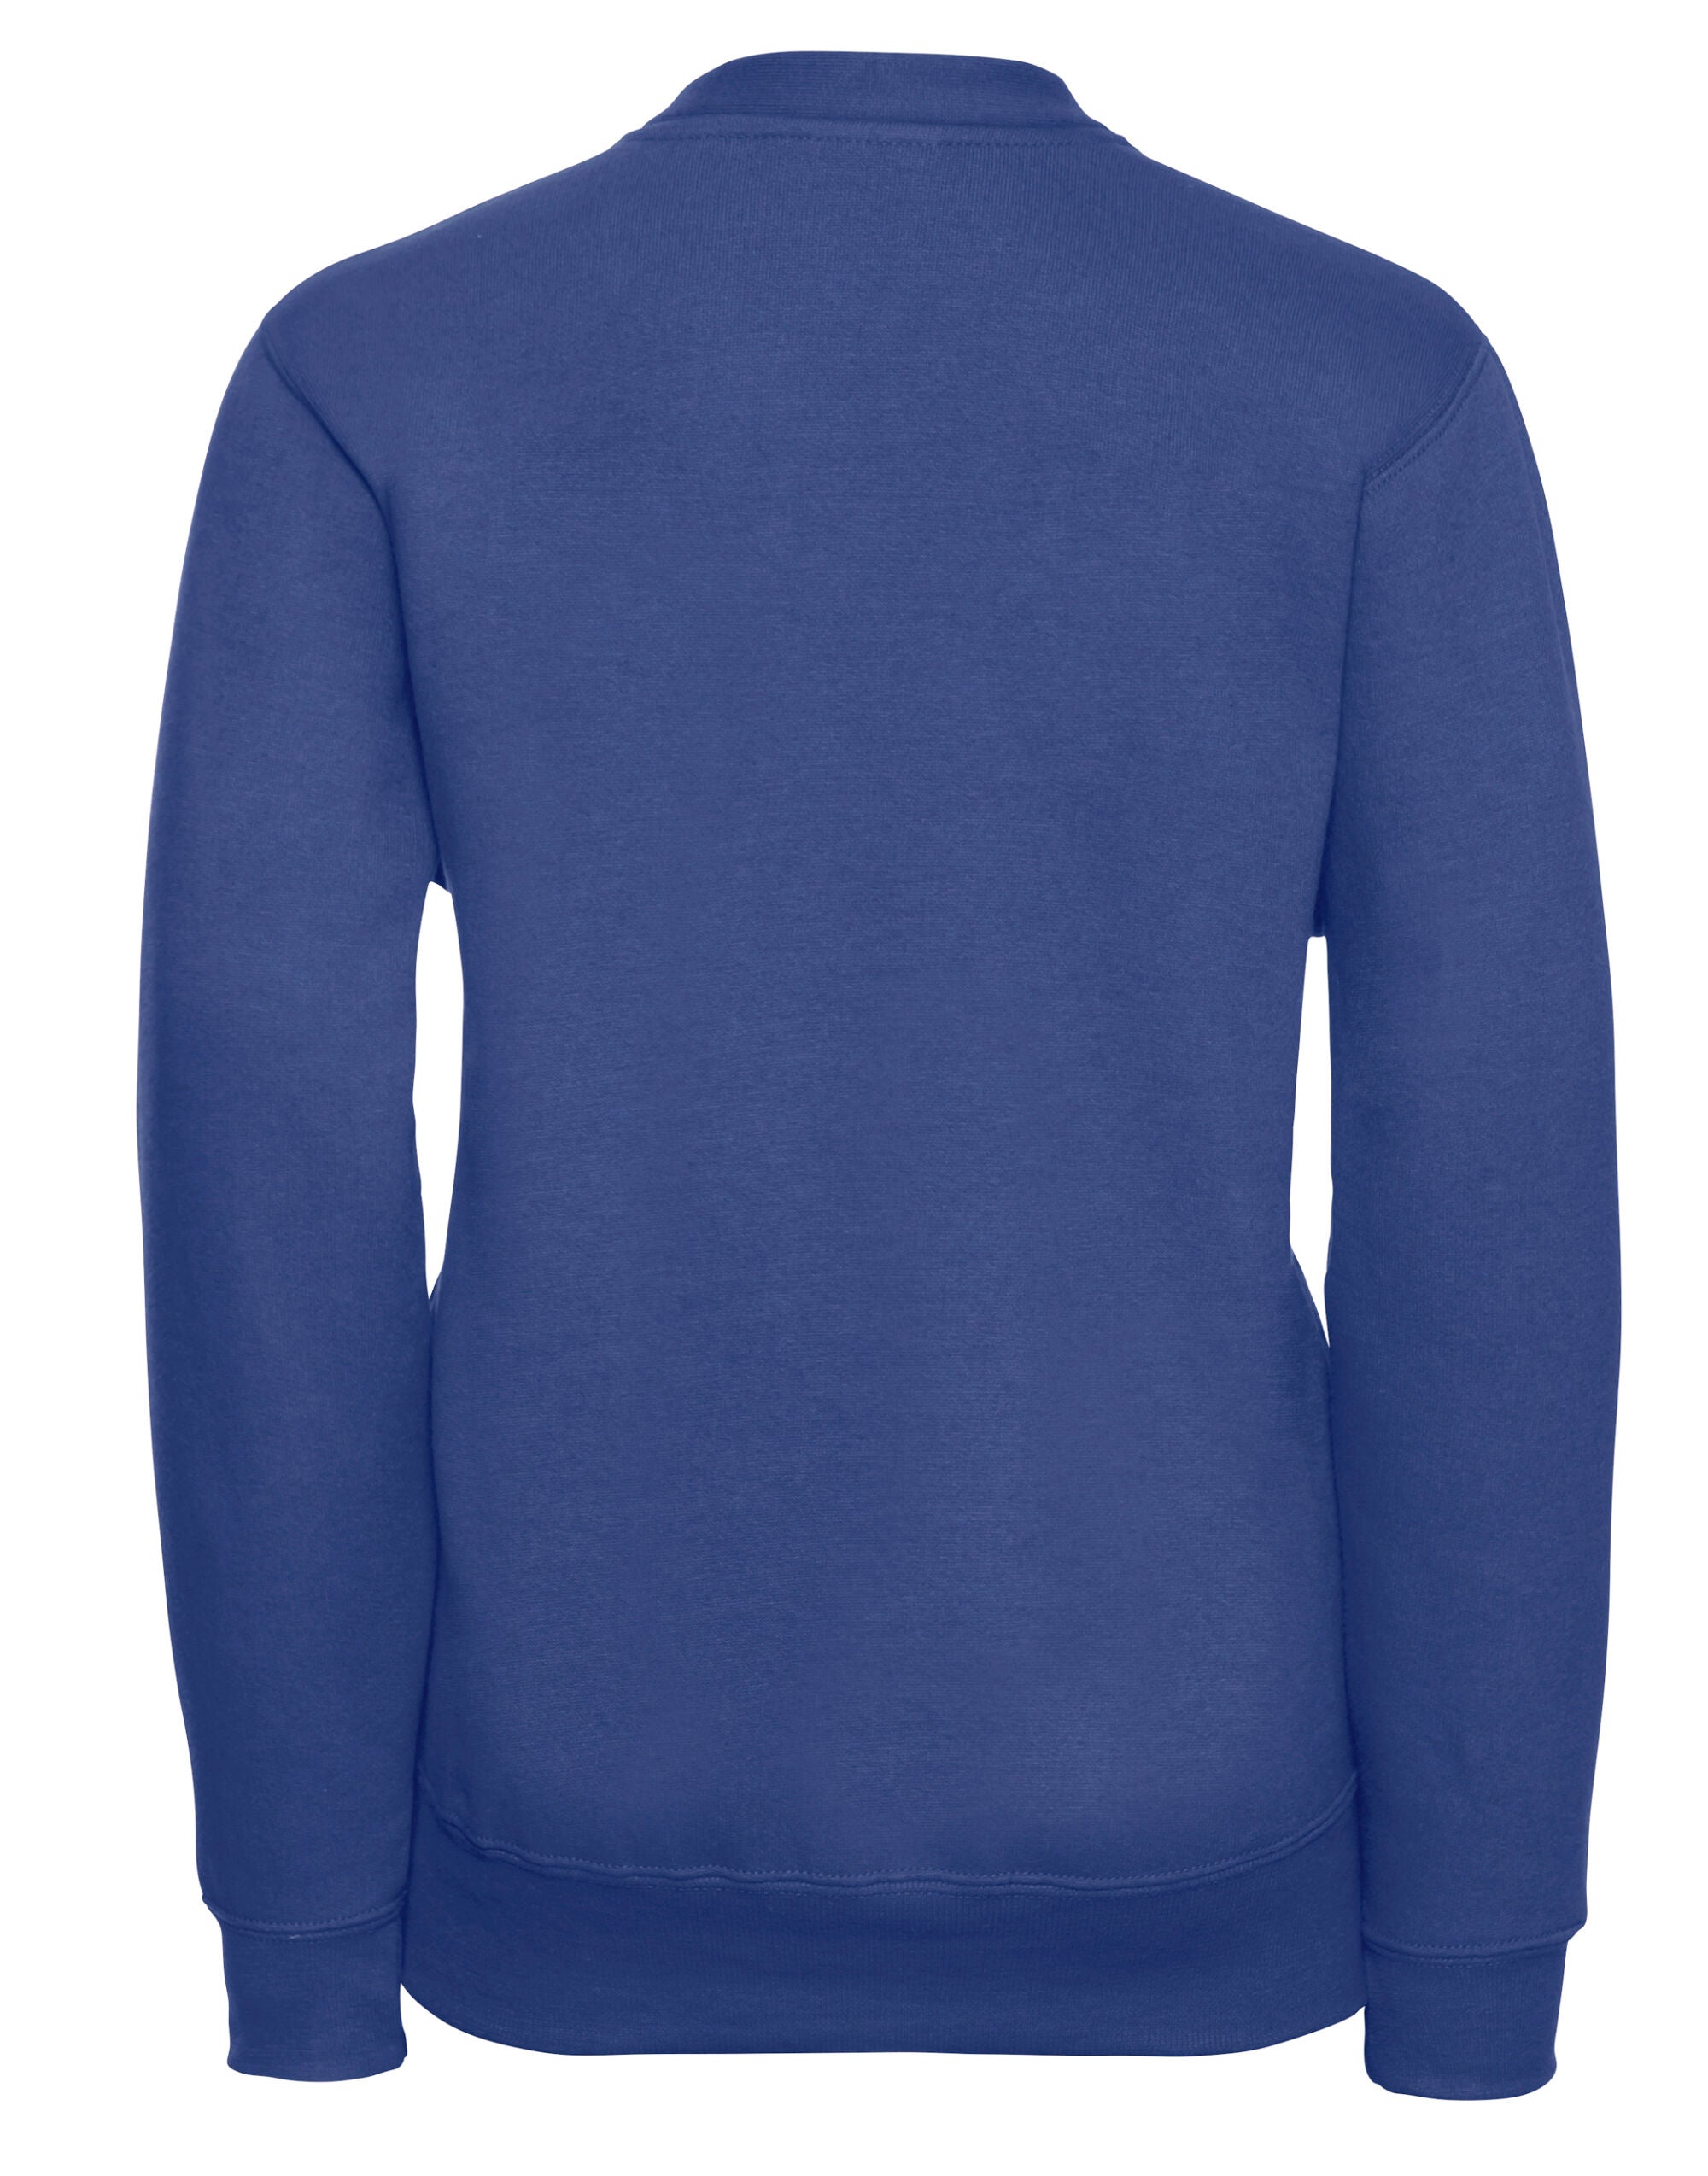 Russell Jerzees Schoolgear Children's Sweatshirt Cardigan This v-neck sweat combines smartness with style and comfort (273B)